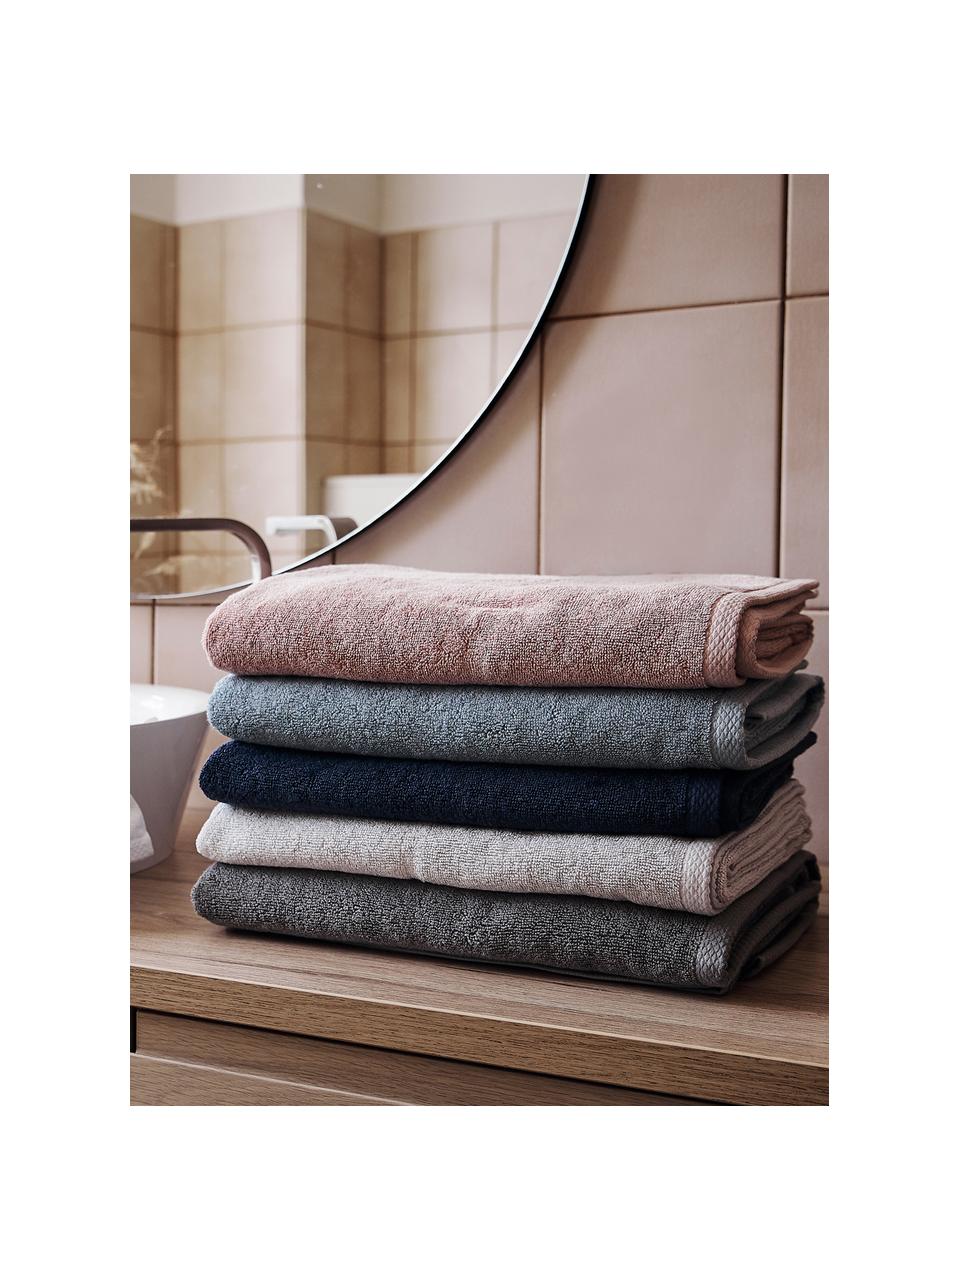 Set de toallas Comfort, 3 uds., Rosa palo, Set de diferentes tamaños